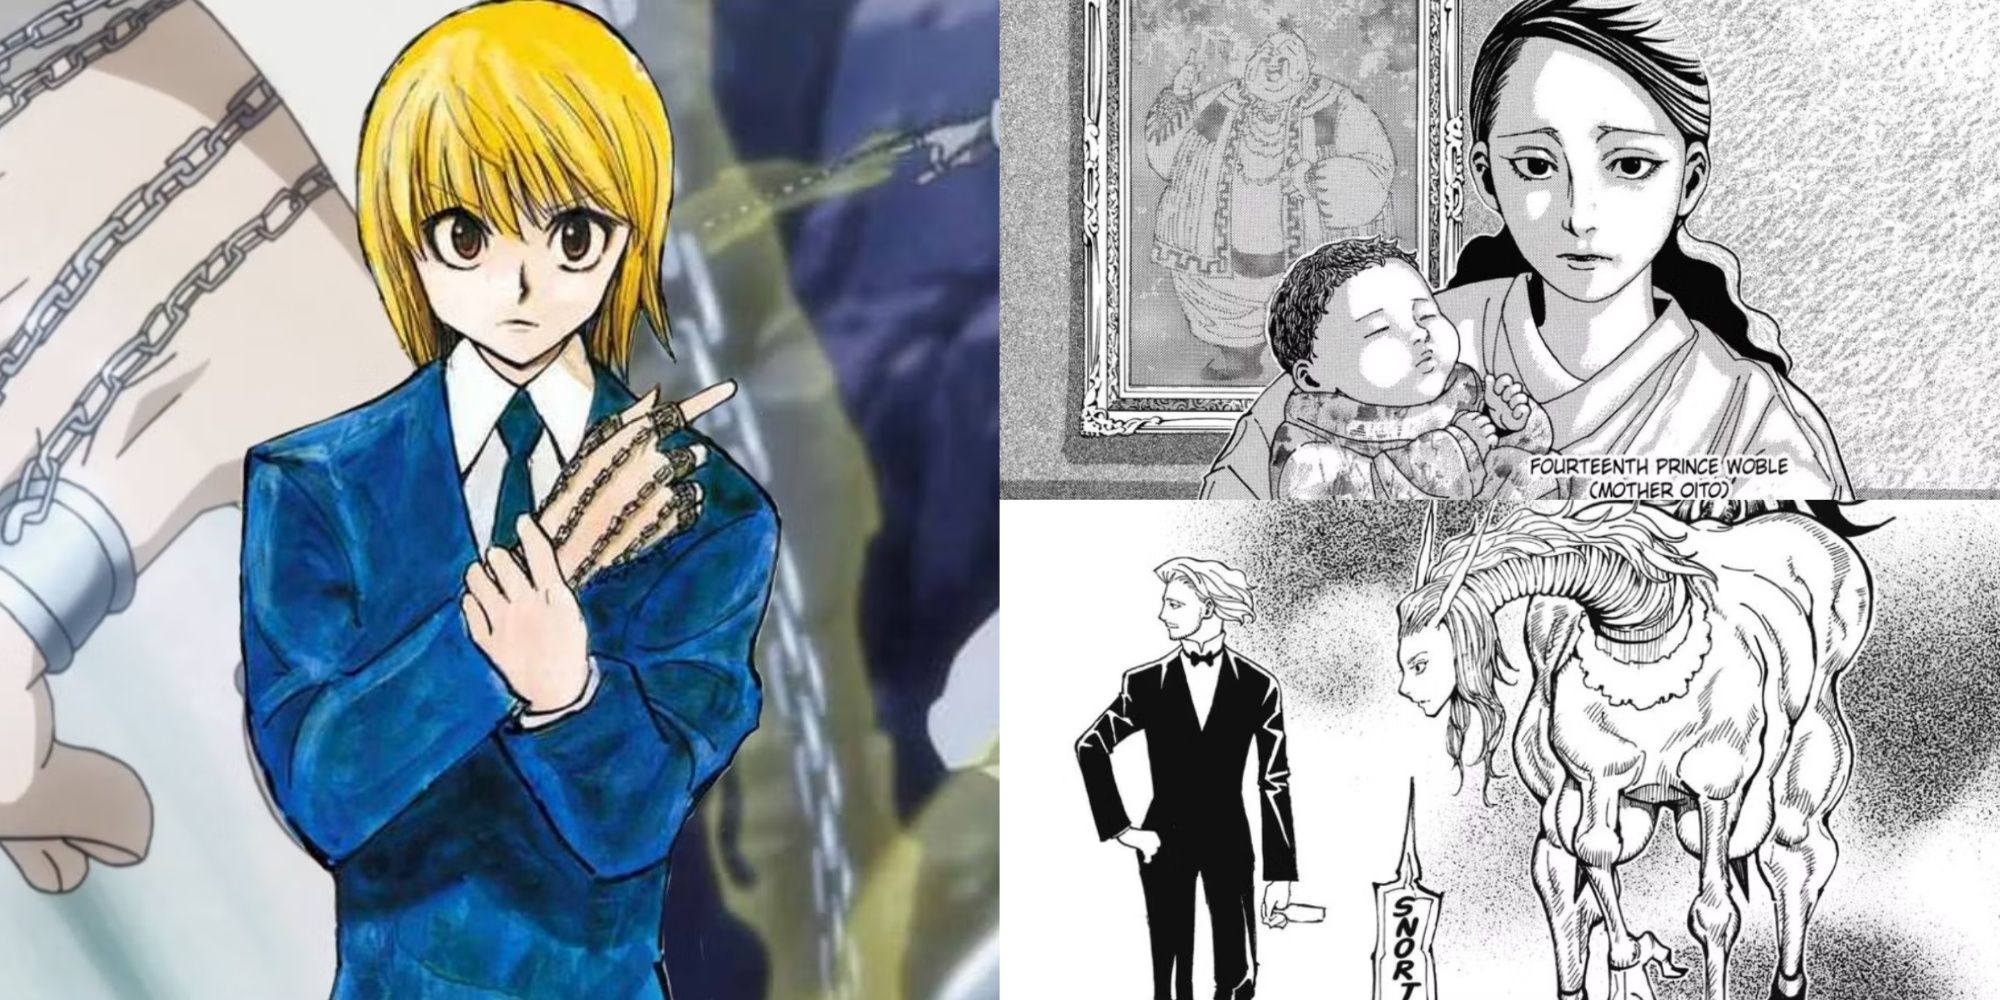 Kurapika, Prince Woble, Queen Oito, and Tserriednich from the Hunter x Hunter manga